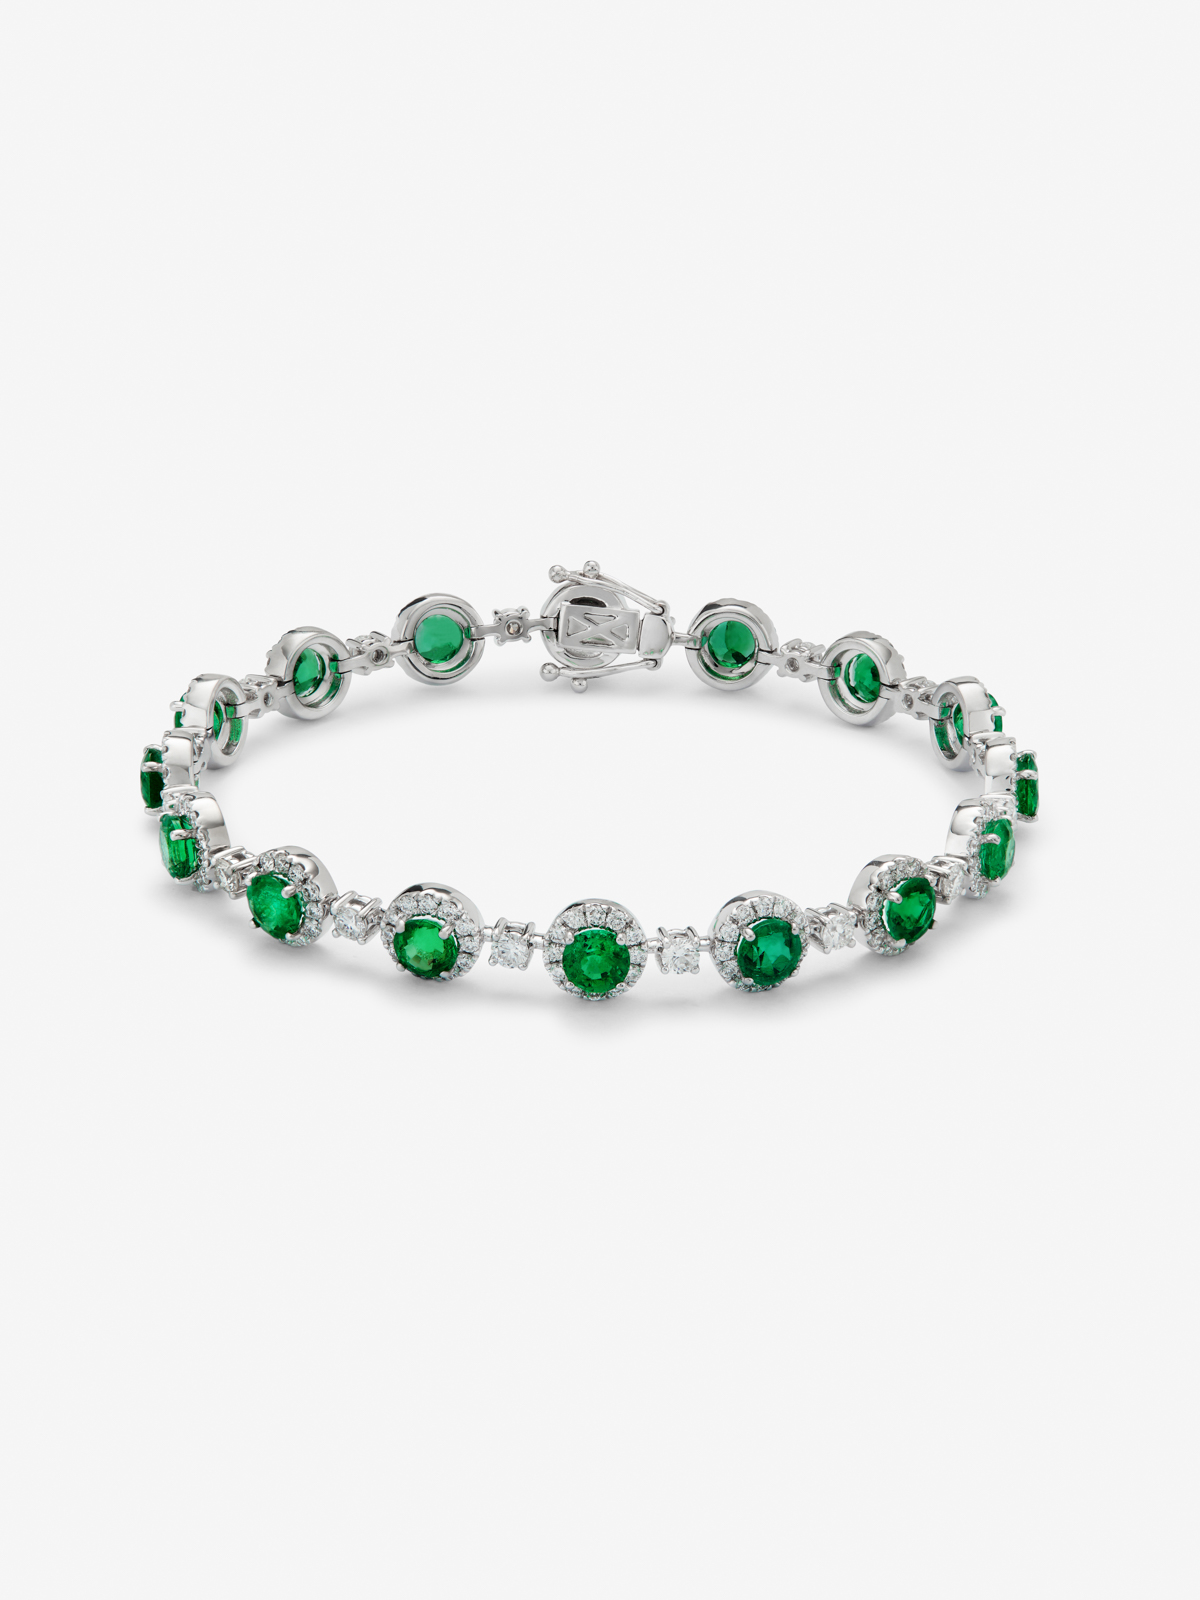 18K white gold bracelet with 5.58 ct brilliant-cut emeralds and 2.73 ct brilliant-cut diamonds